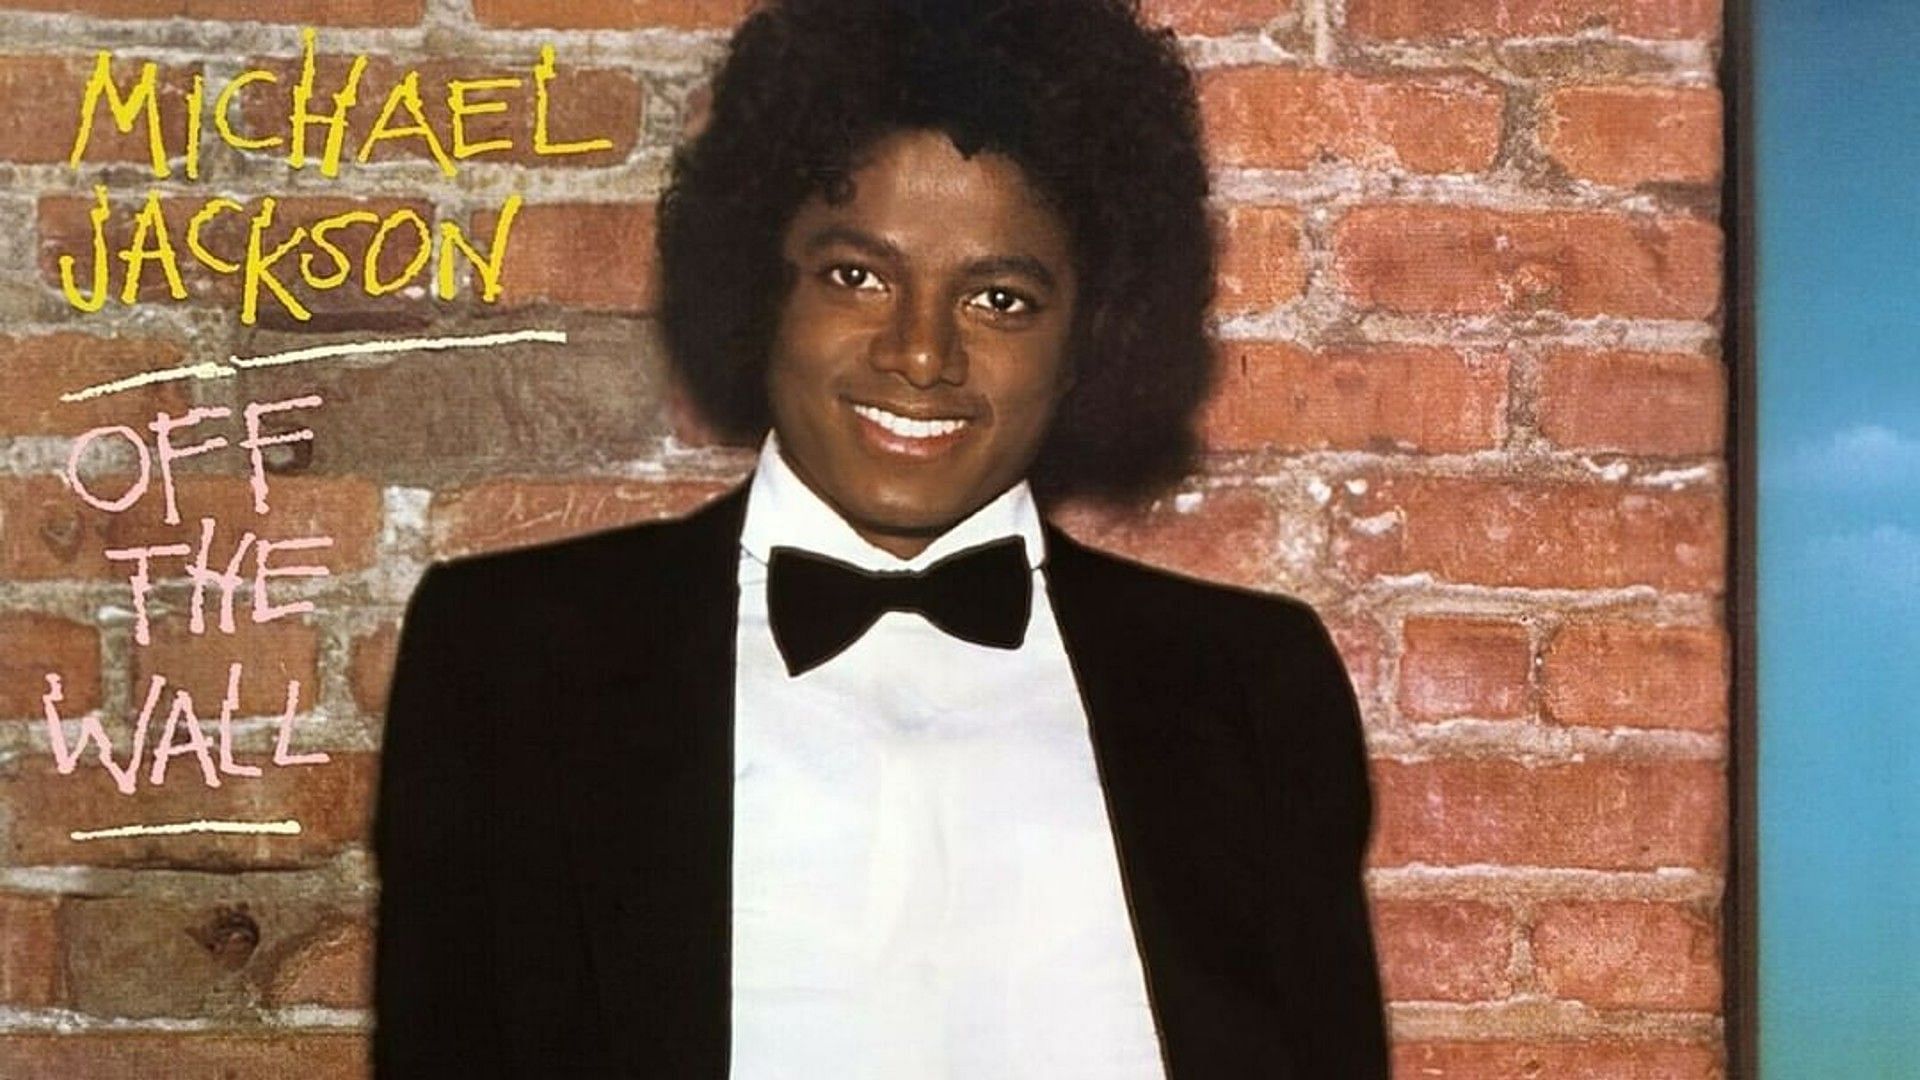 Michael Jackson (Image via Instagram - @michaeljackson)